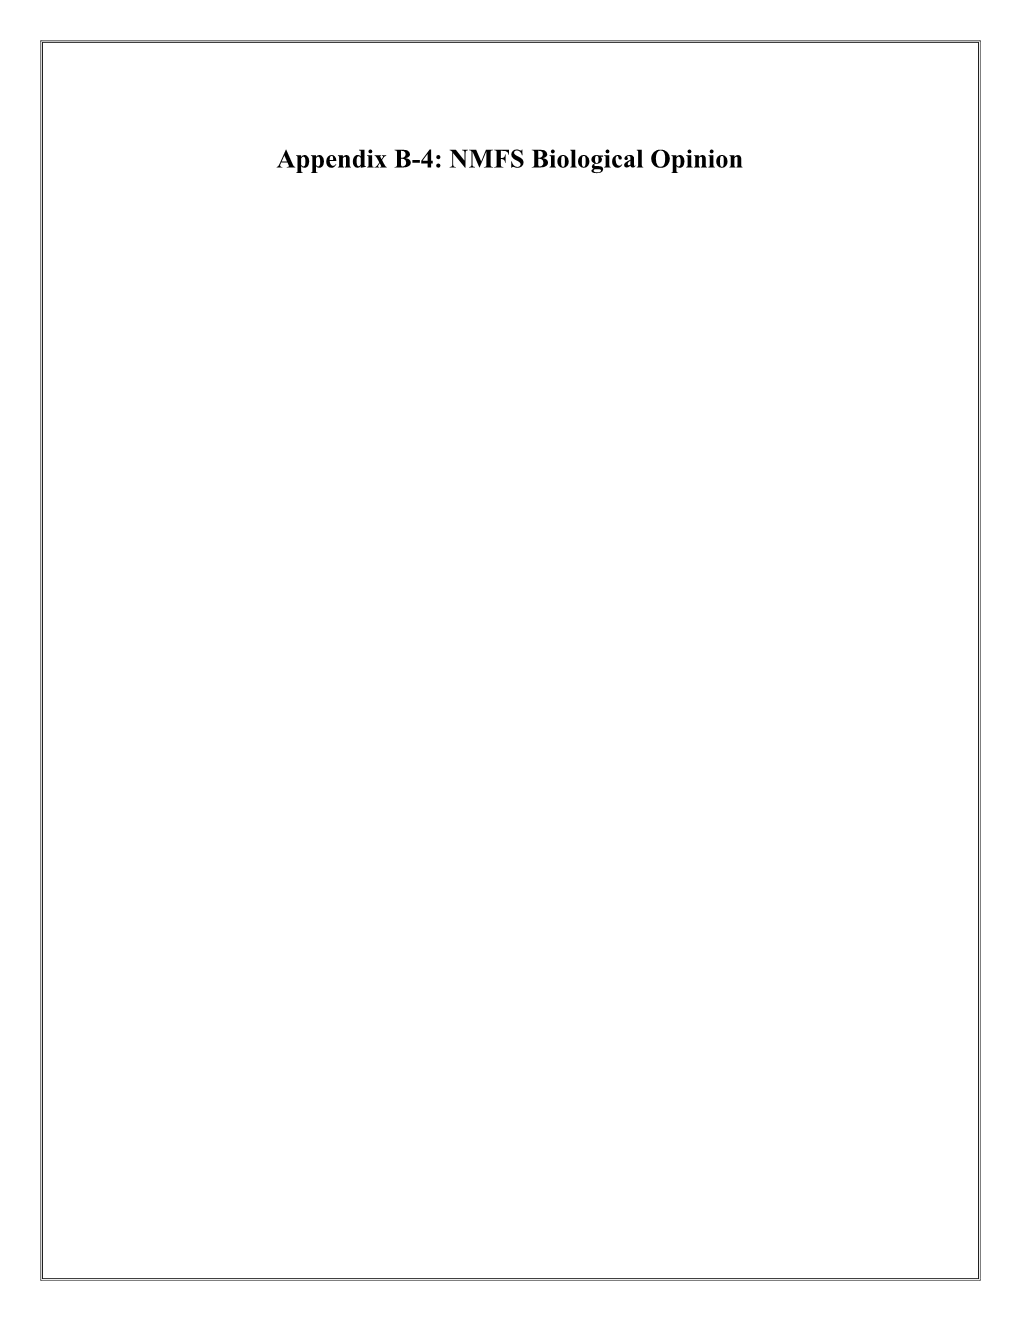 Appendix B-4: NMFS Biological Opinion